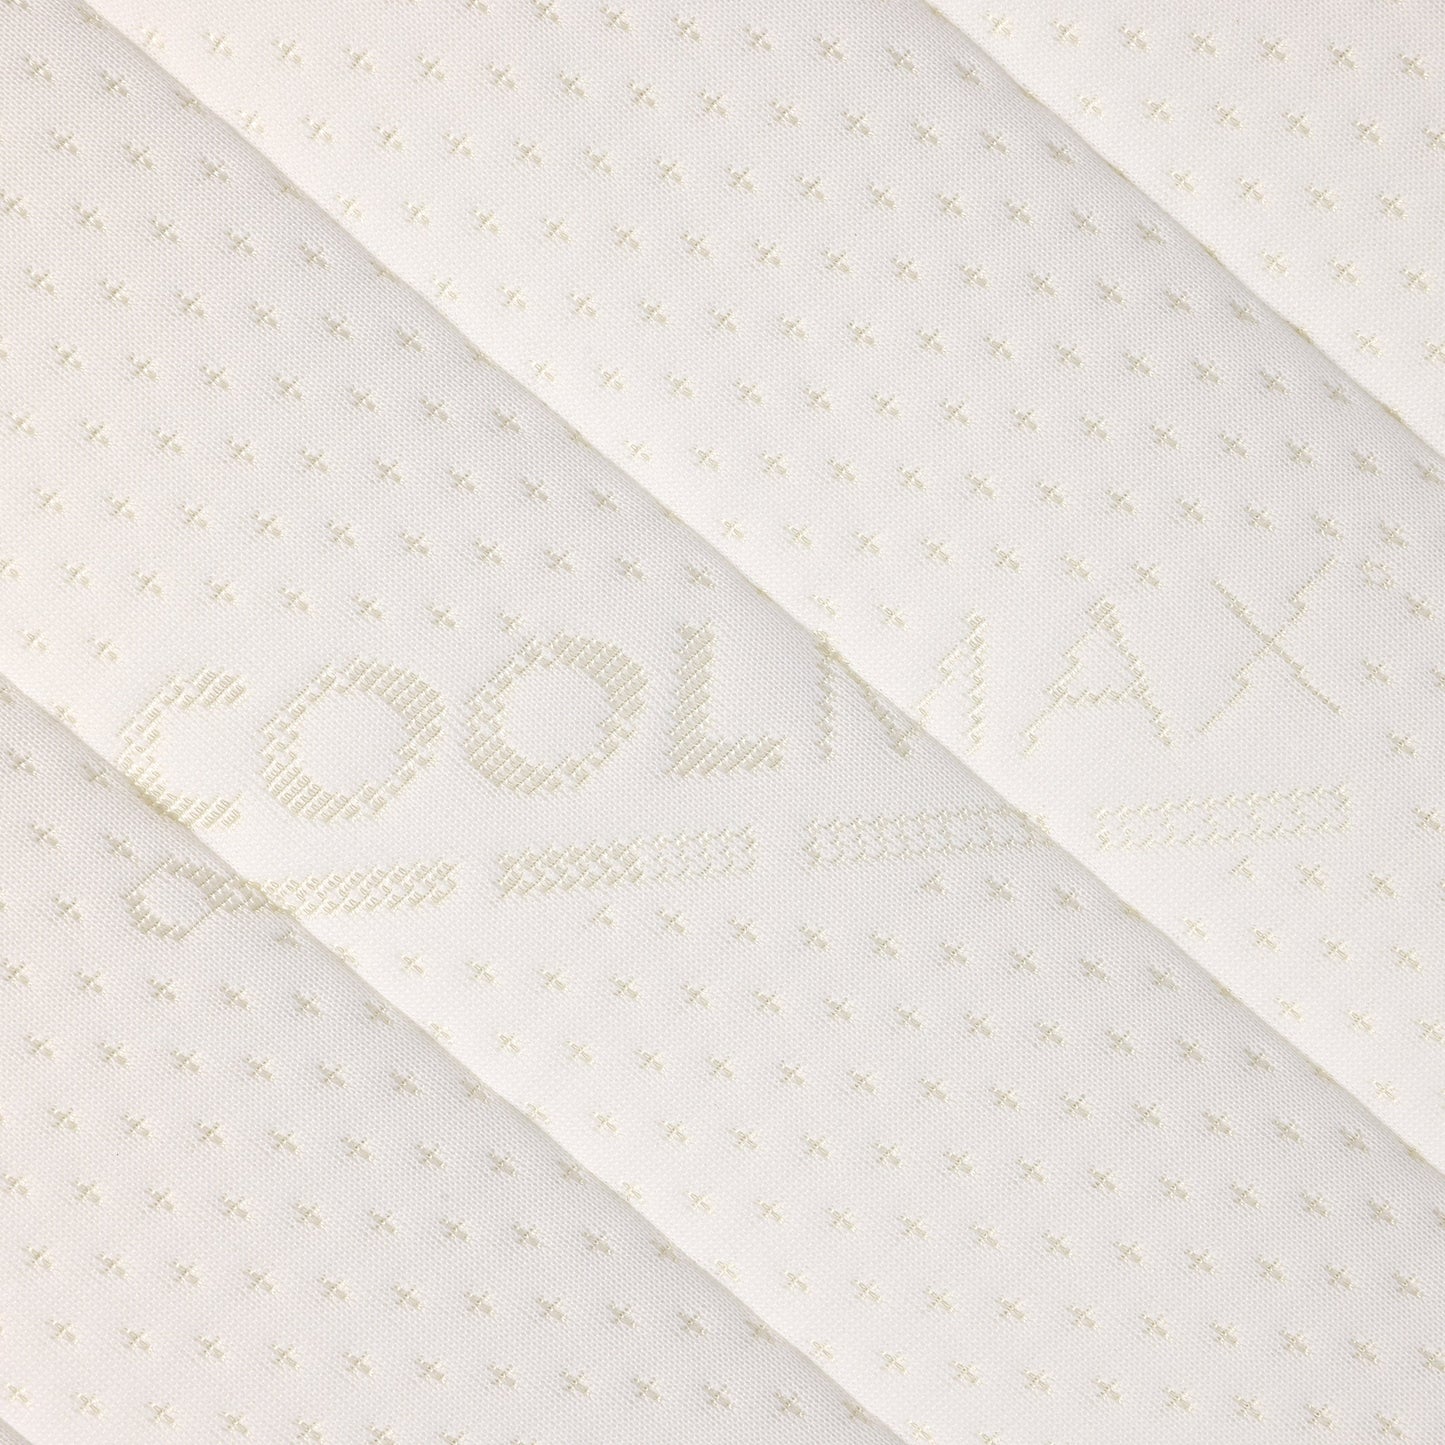 Ultima Gold -  Adjustable Bed Mattress – Non Memory Foam - Soft